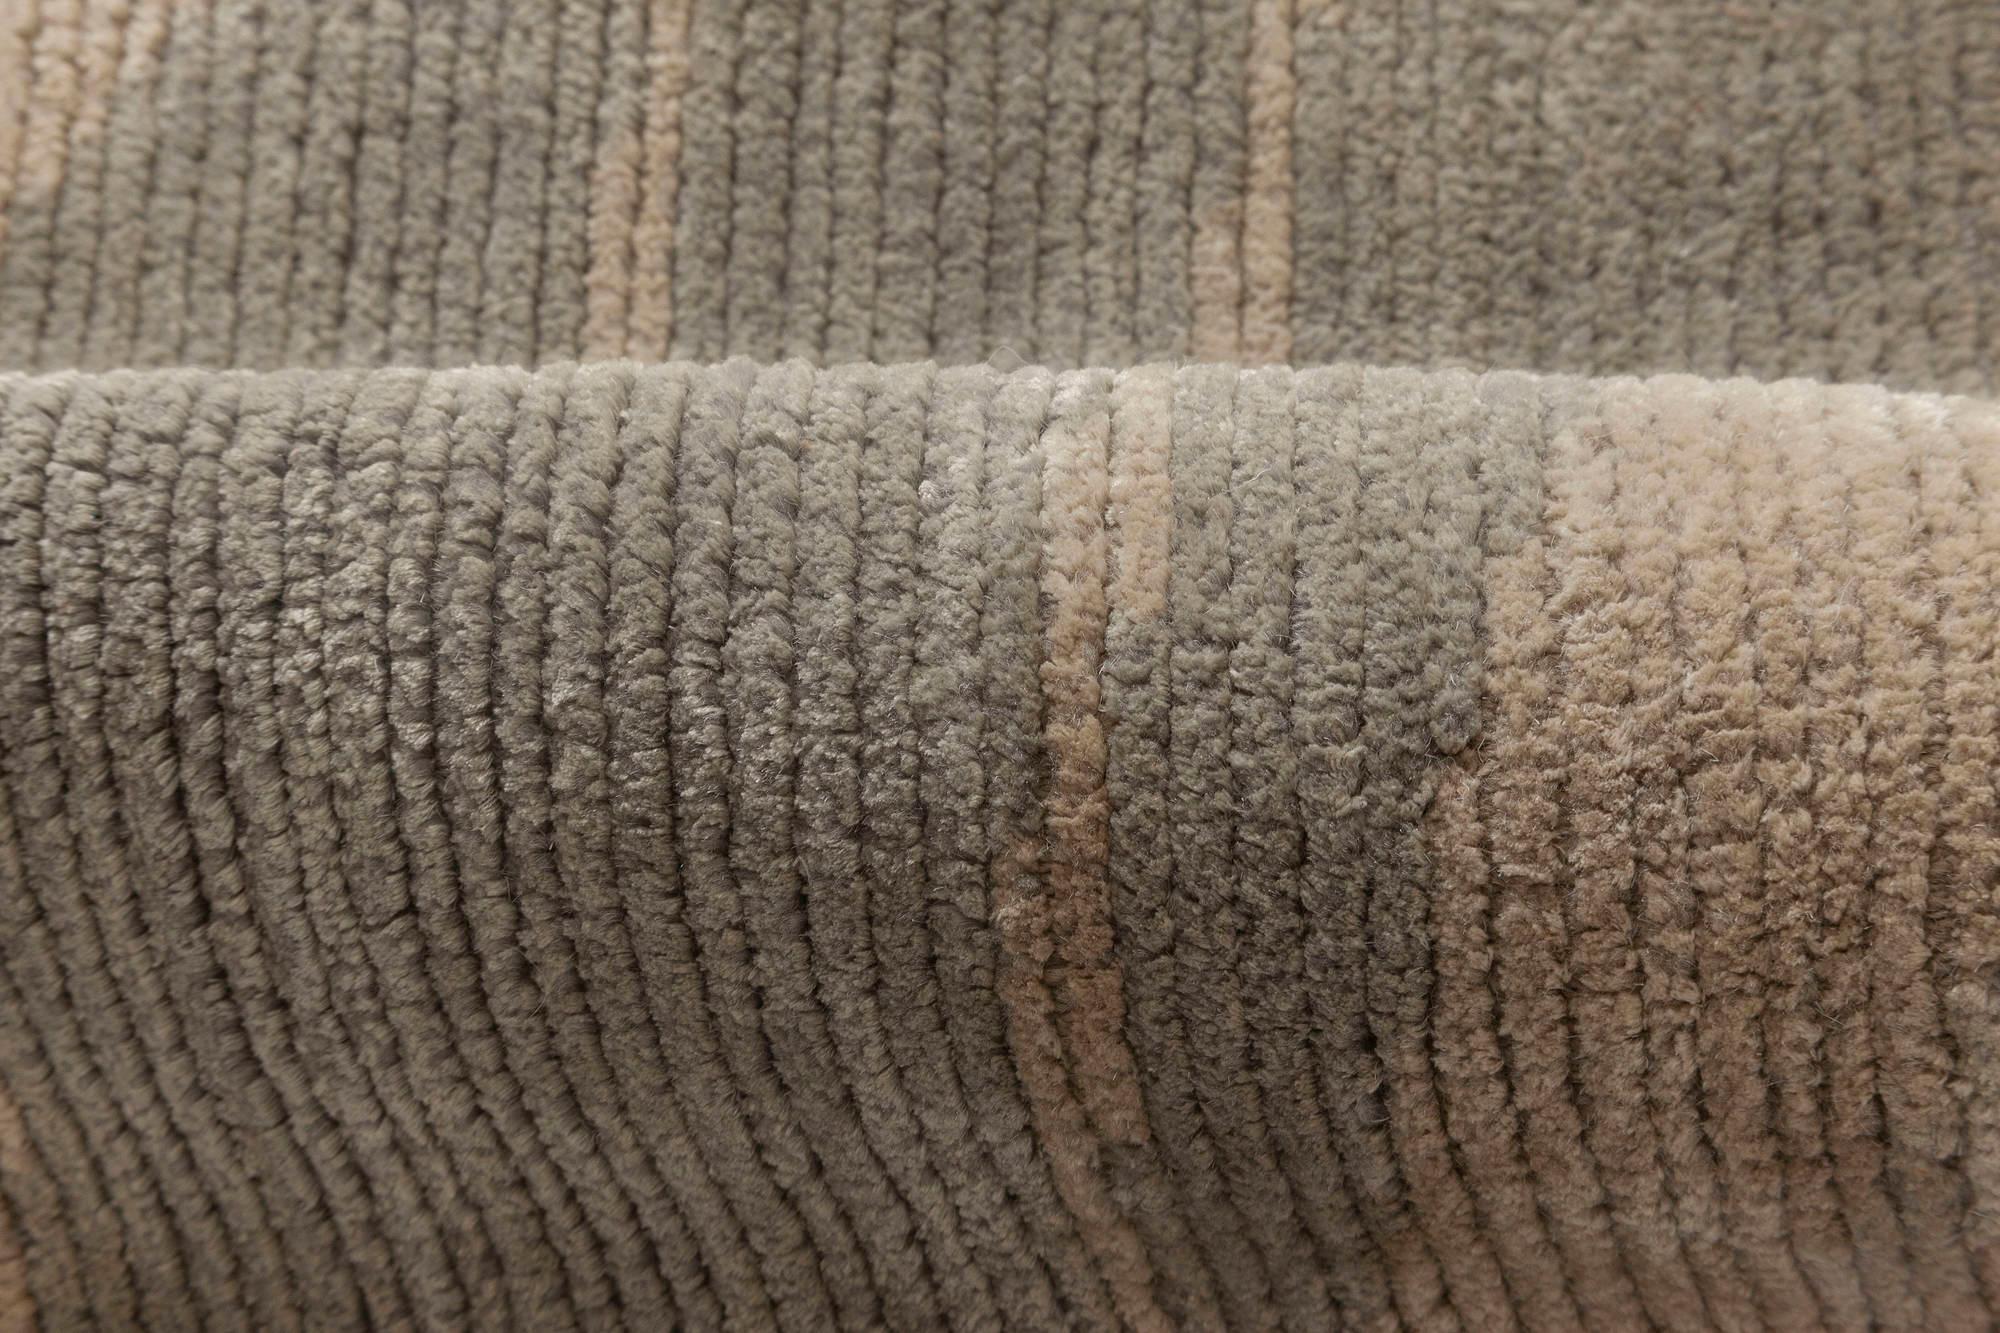 Modern high-quality beige and gray handmade wool runner by Doris Leslie Blau.
Size: 2'0